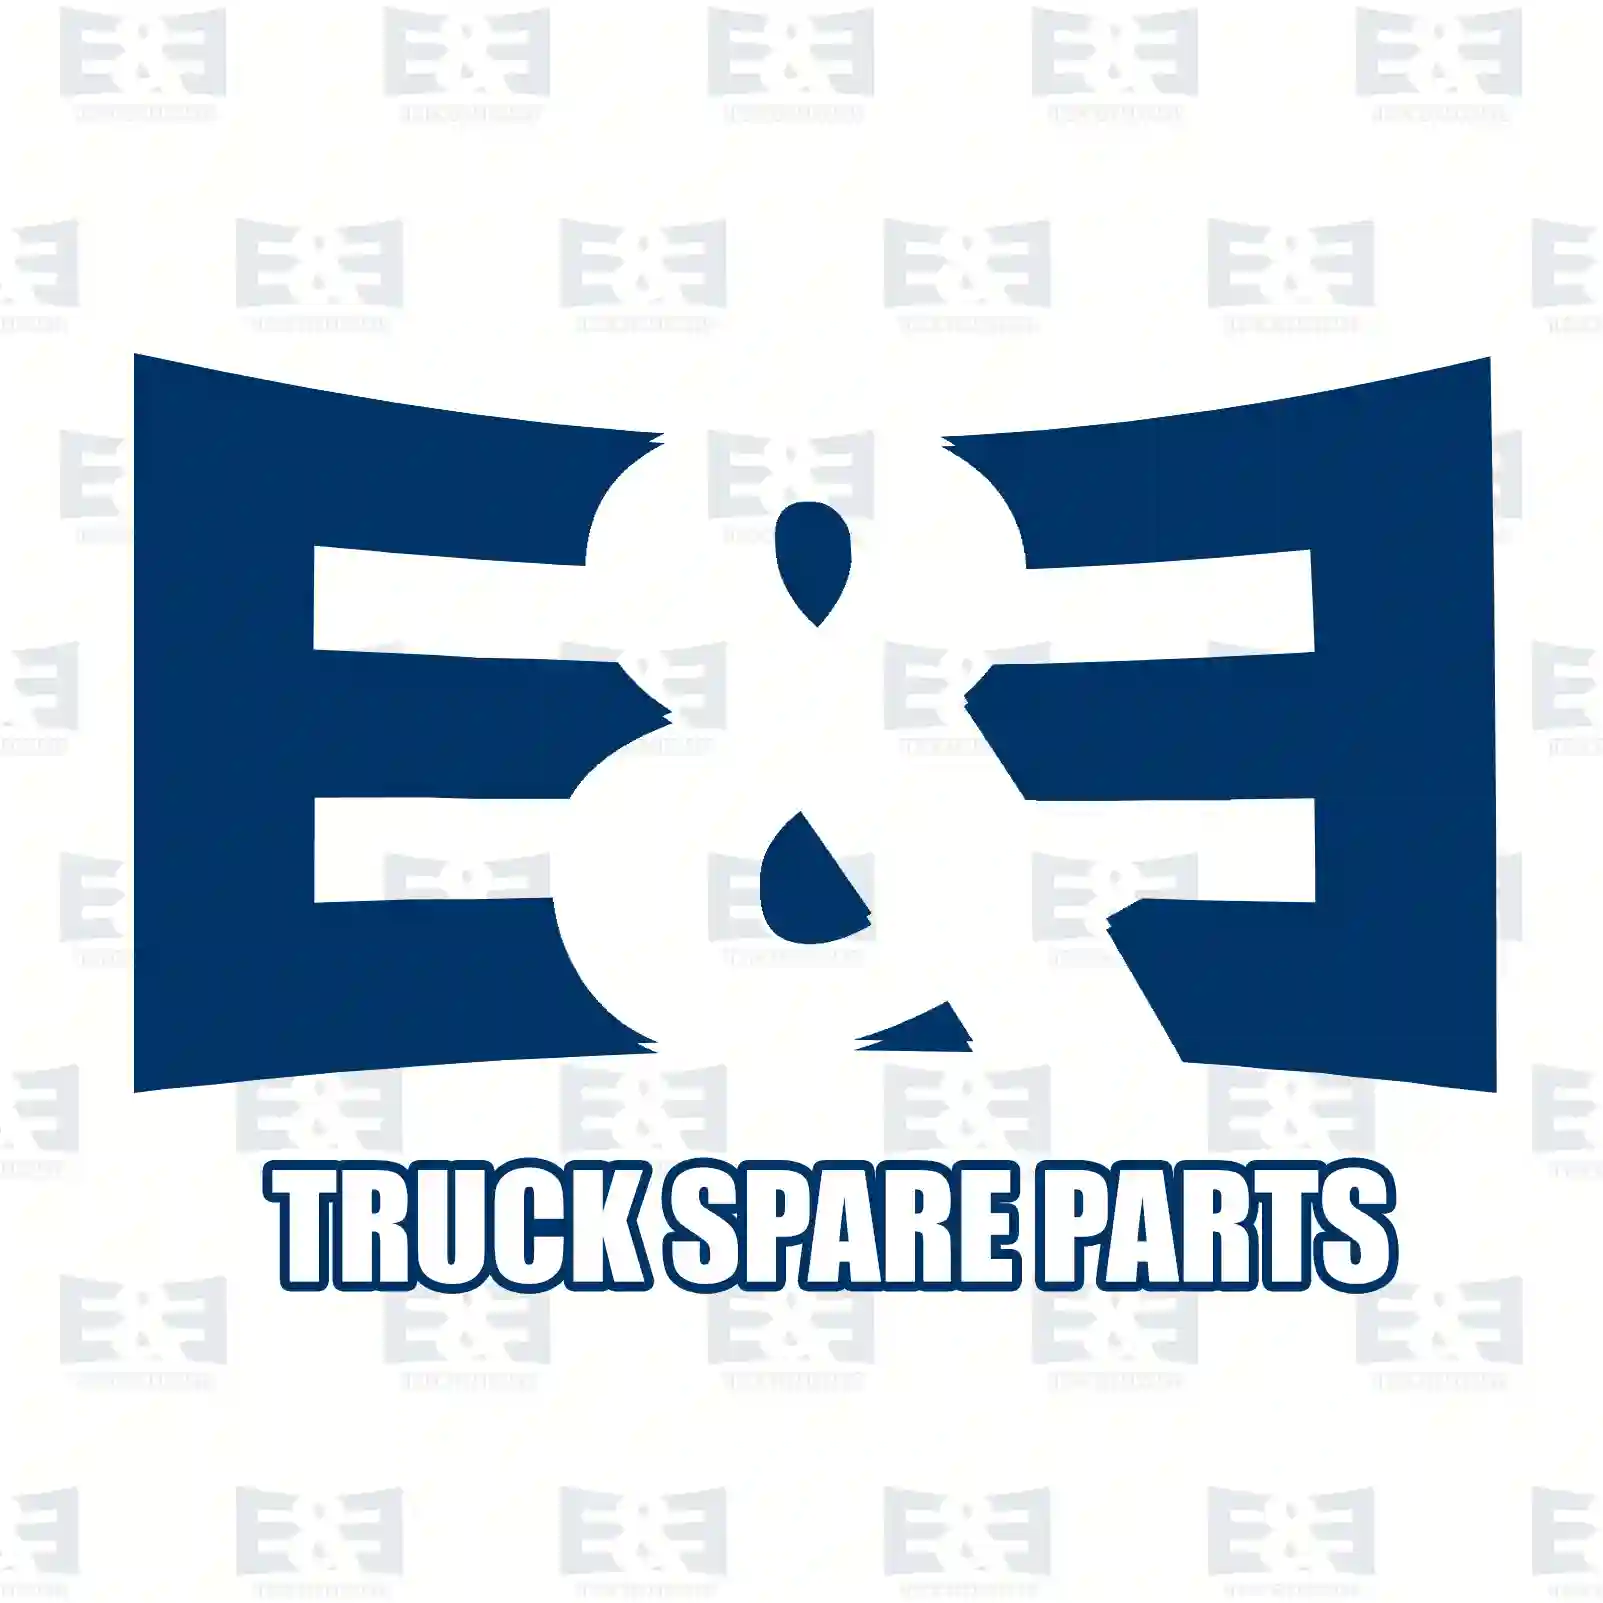 Drum brake lining kit, axle kit - oversize, 2E2294462, 0682106, 0682818, 0682850, 0683026, 0683271, 1781362, 682102, 682106, 682818, 682850, 683026, 683271 ||  2E2294462 E&E Truck Spare Parts | Truck Spare Parts, Auotomotive Spare Parts Drum brake lining kit, axle kit - oversize, 2E2294462, 0682106, 0682818, 0682850, 0683026, 0683271, 1781362, 682102, 682106, 682818, 682850, 683026, 683271 ||  2E2294462 E&E Truck Spare Parts | Truck Spare Parts, Auotomotive Spare Parts